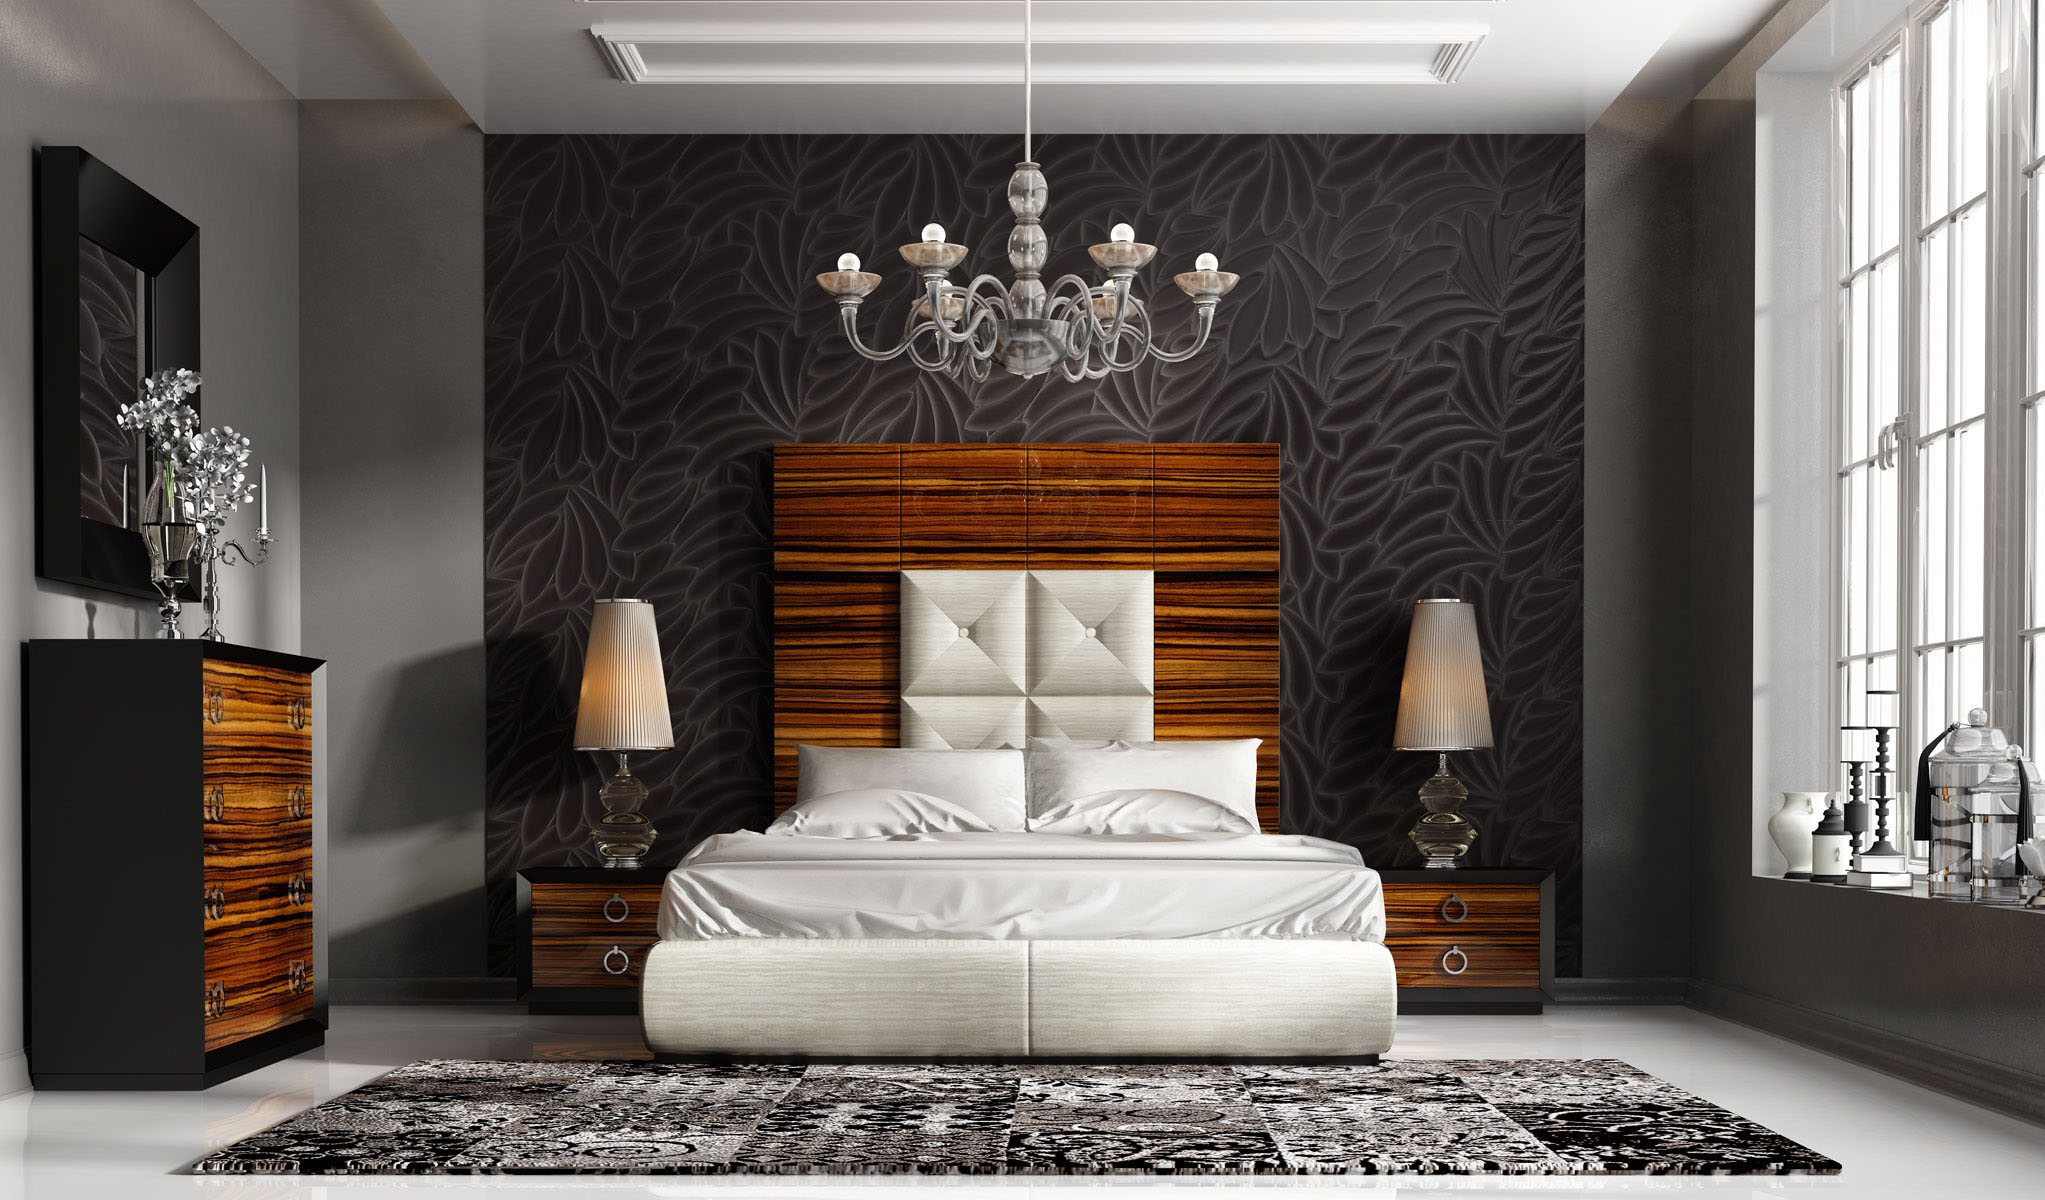 high end bathroom furniture uk High-class leather high end bedroom furniture sets in walnut el paso